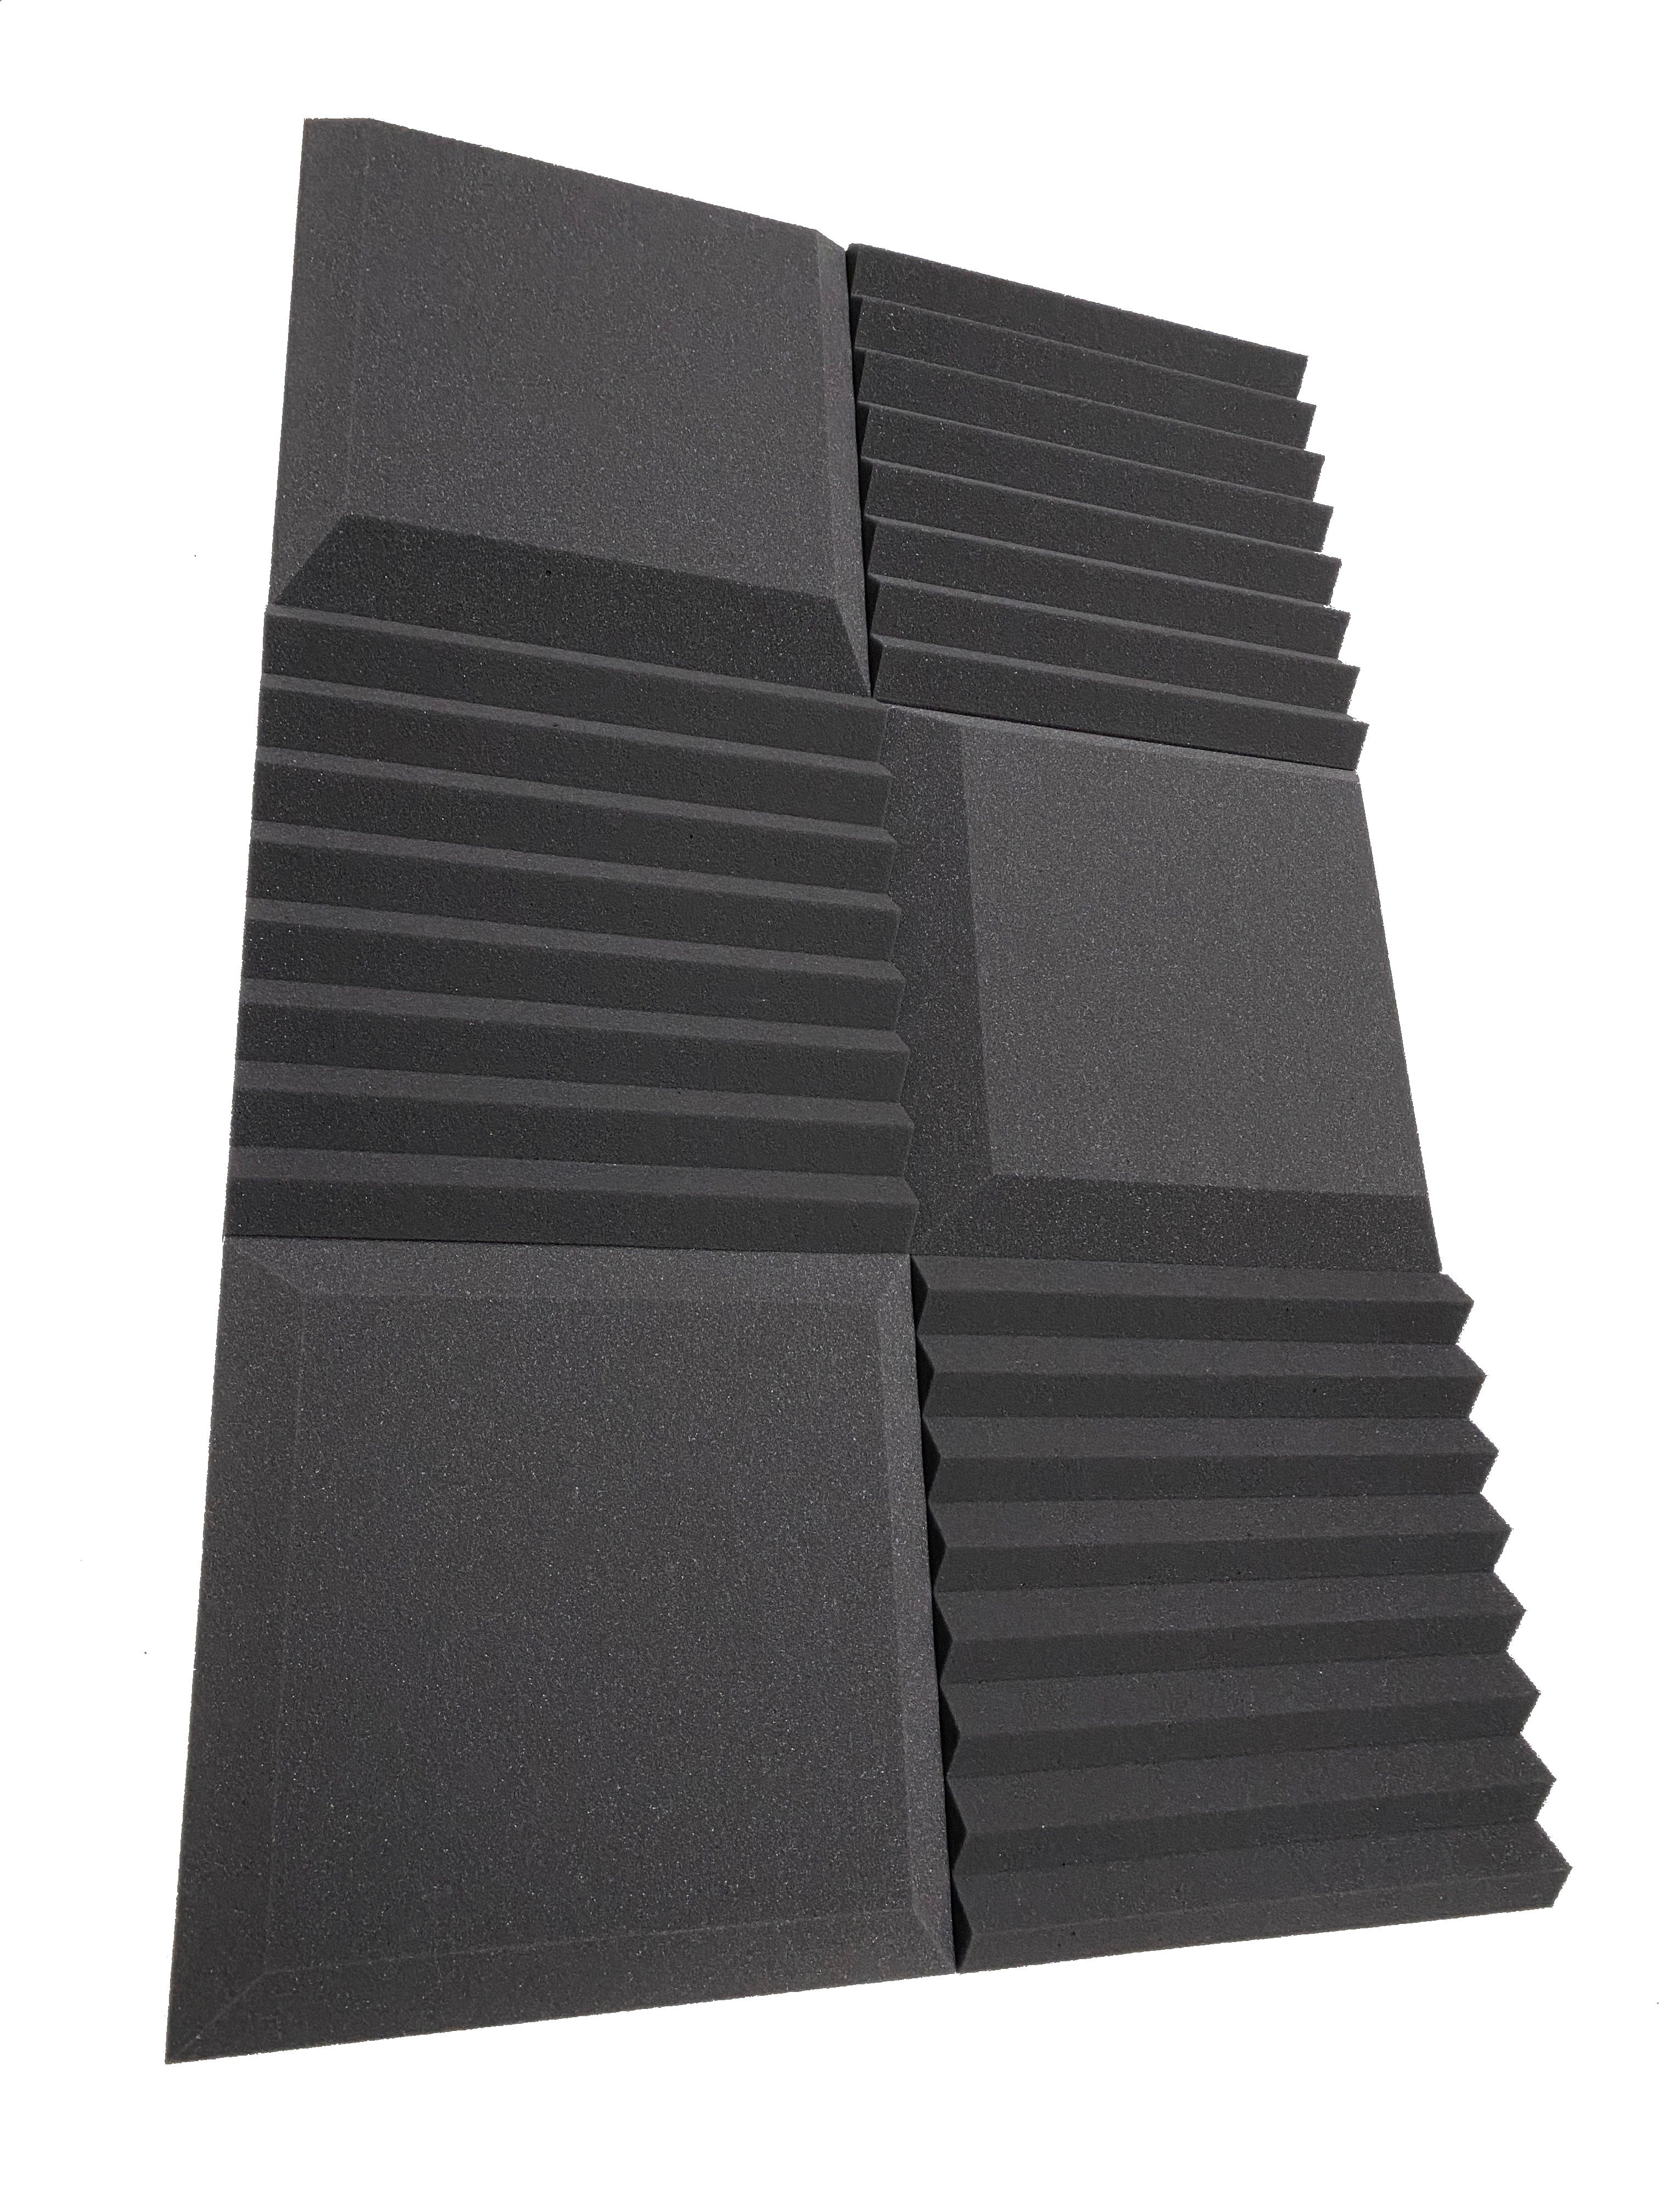 Buy dark-grey Euphonic Wedge Standard 12&quot; Acoustic Studio Foam Tile Pack